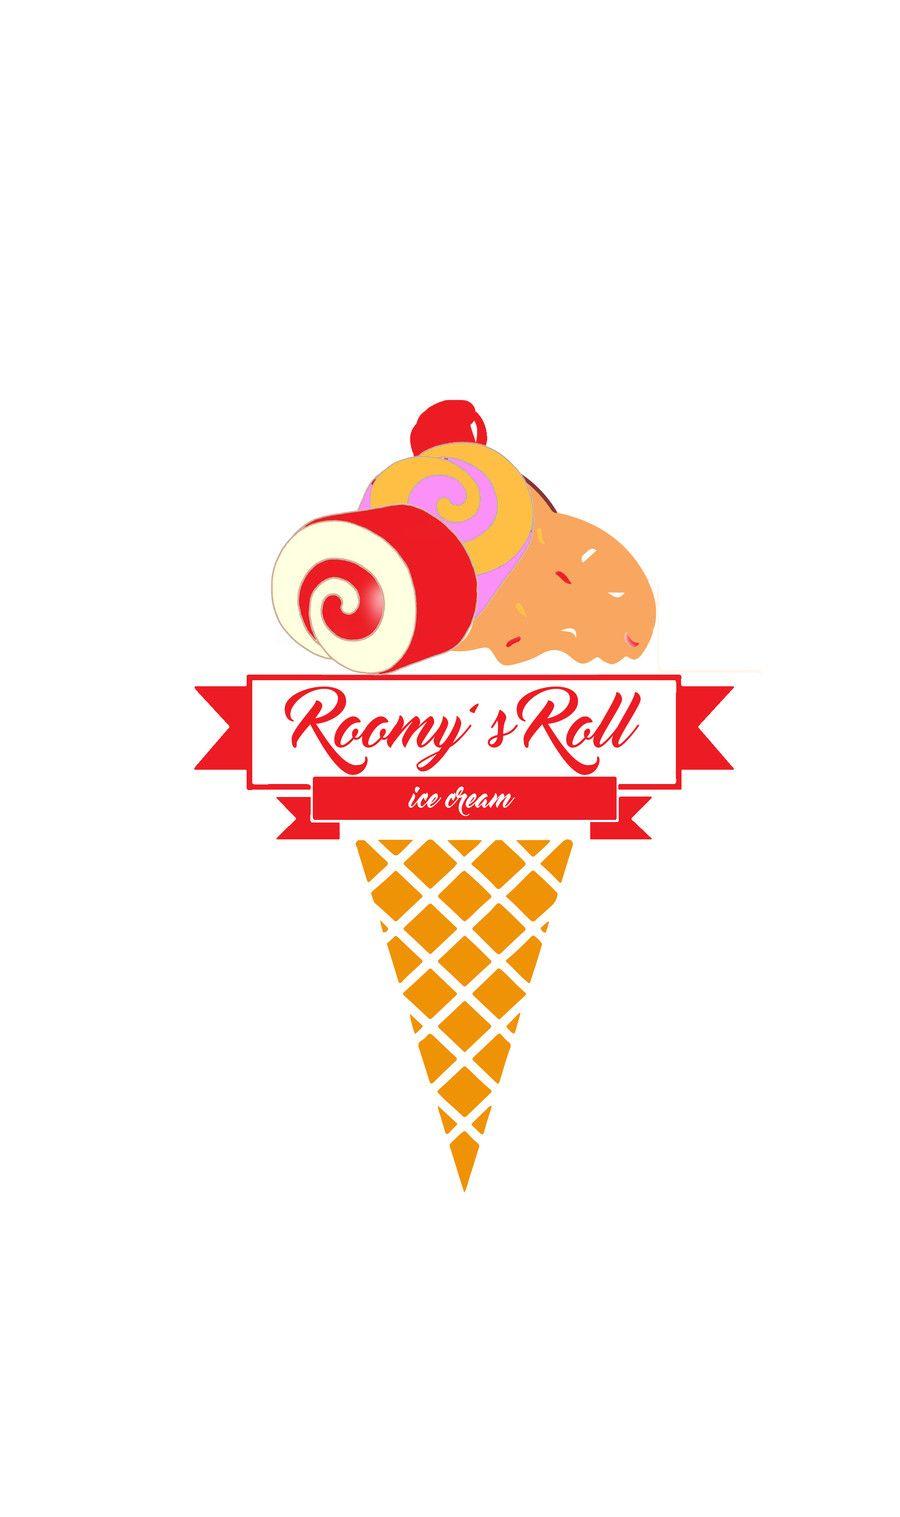 Ice Cream Cone Logo - Entry by minastudio for Design a Logo for Fried Ice Cream Roll